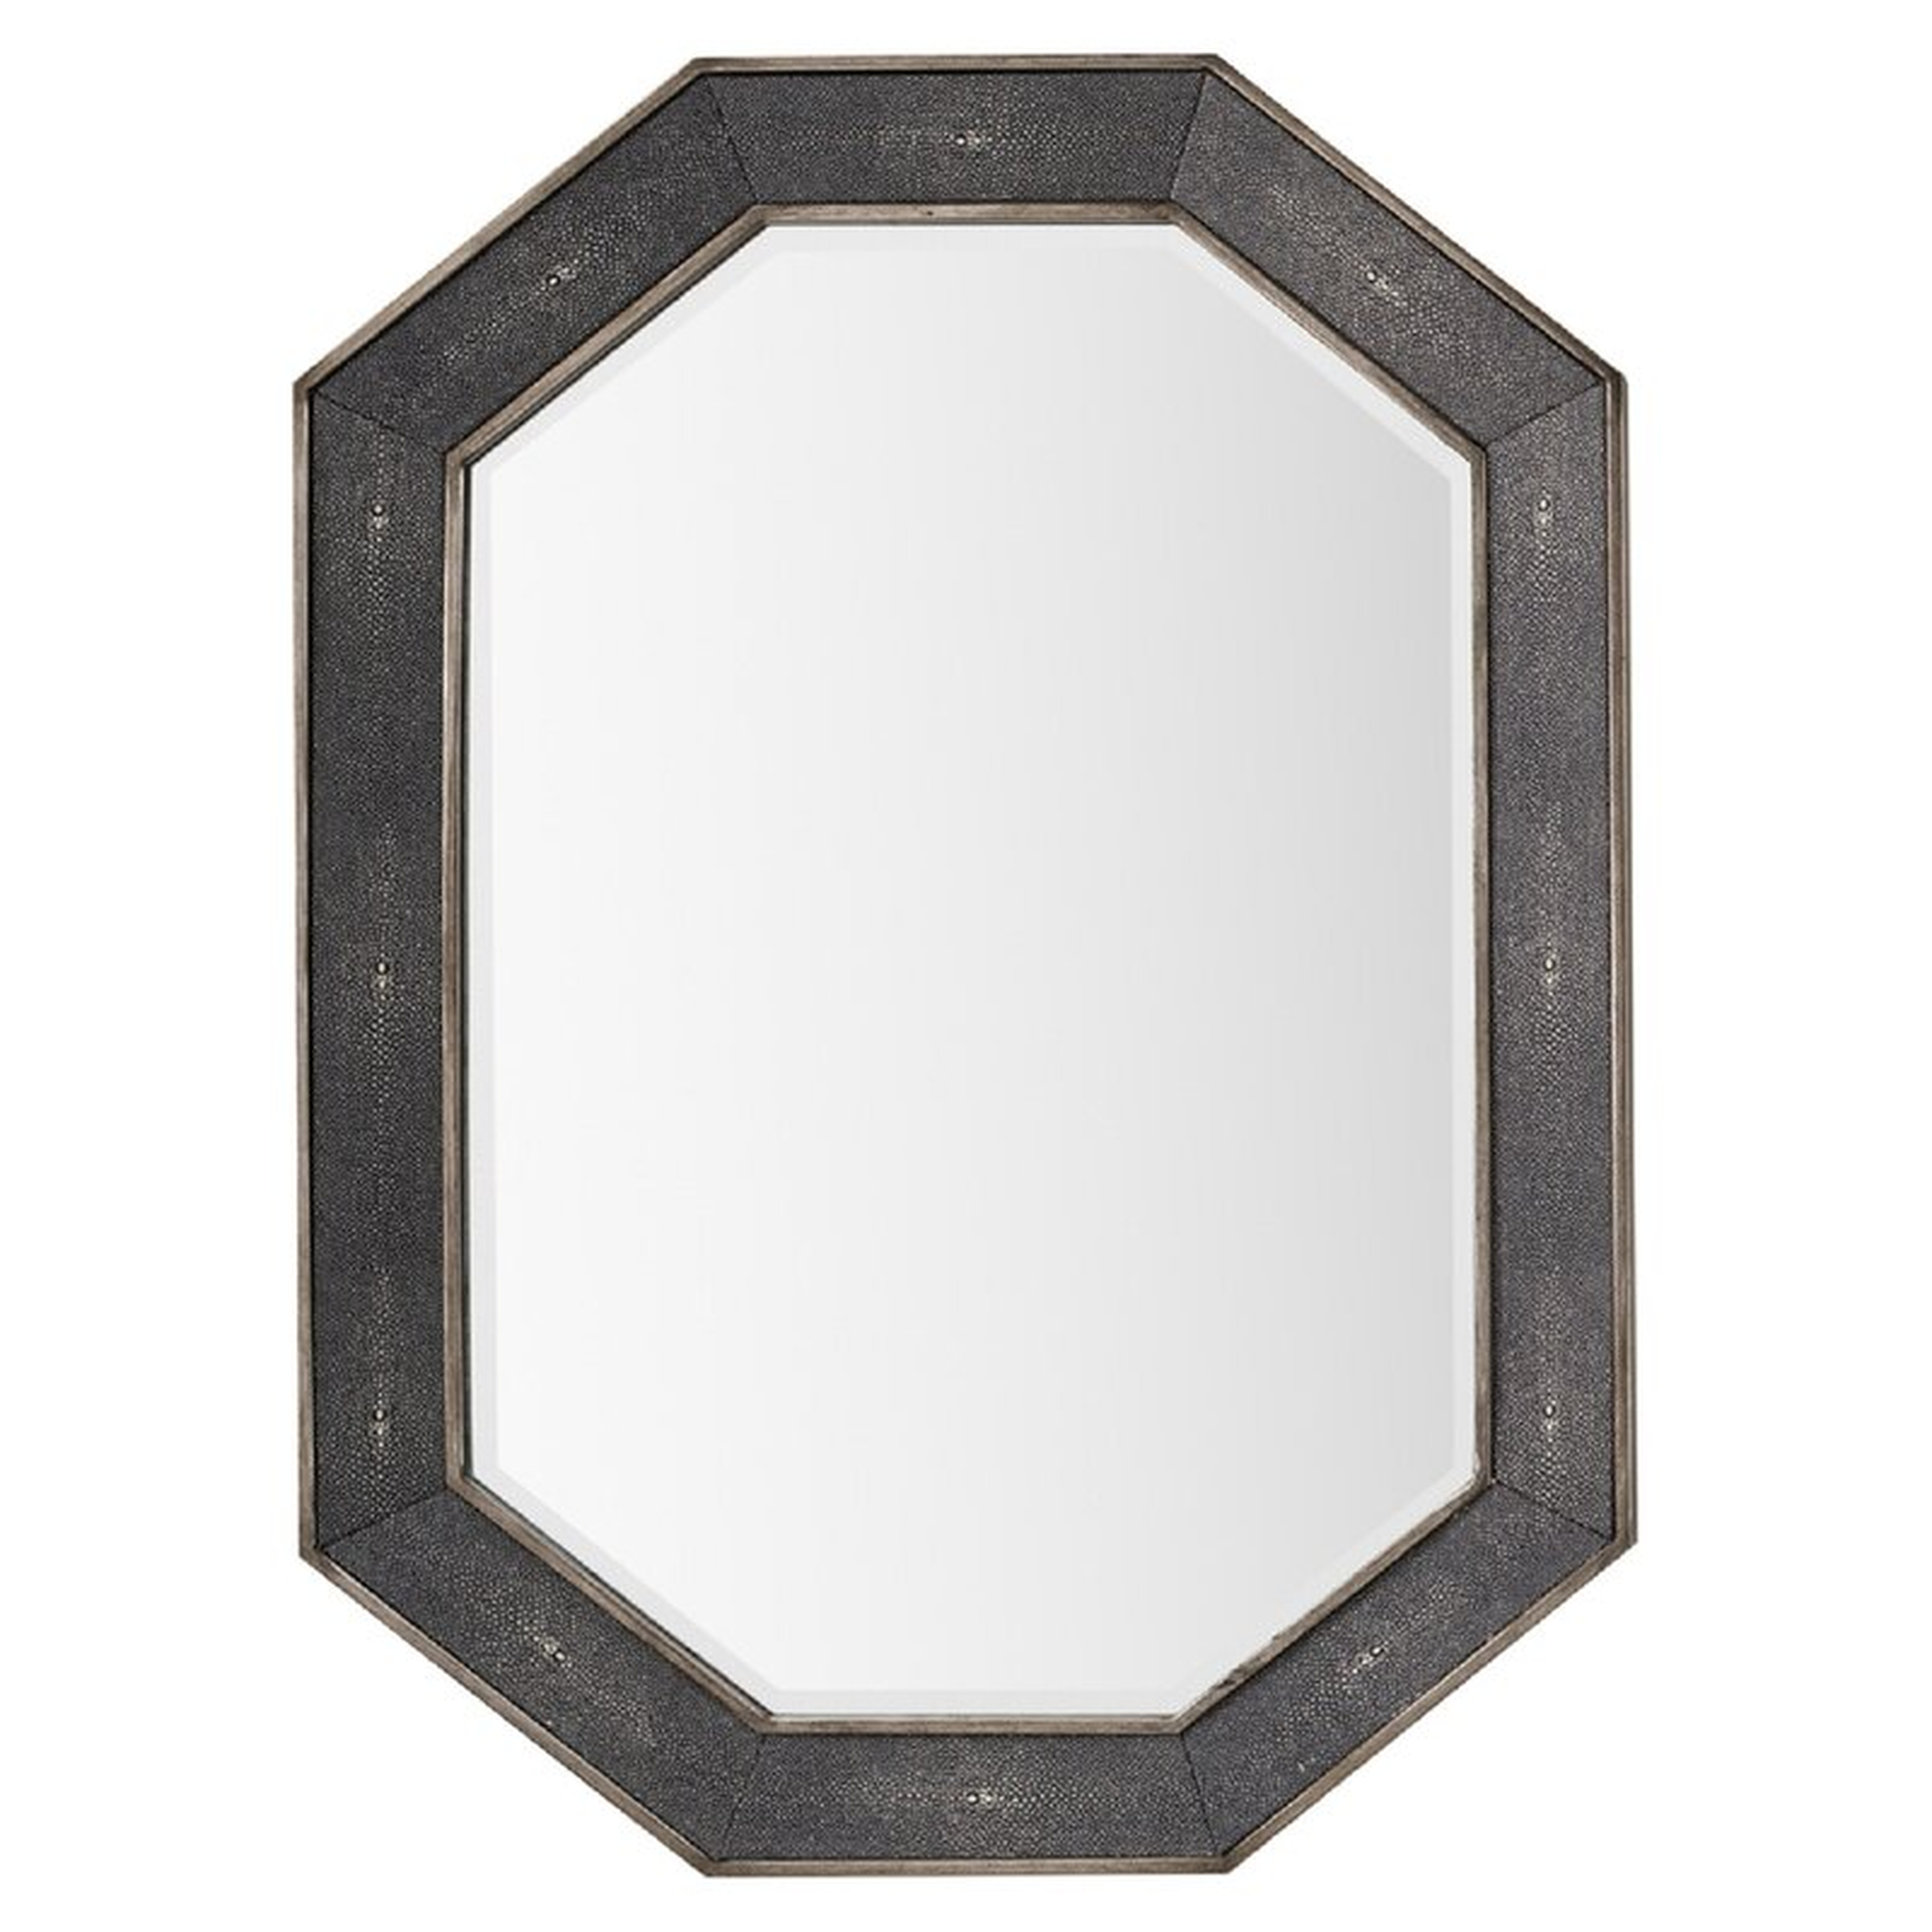 Loman Modern Beveled Bathroom / Vanity Mirror, Charcoal - Wayfair